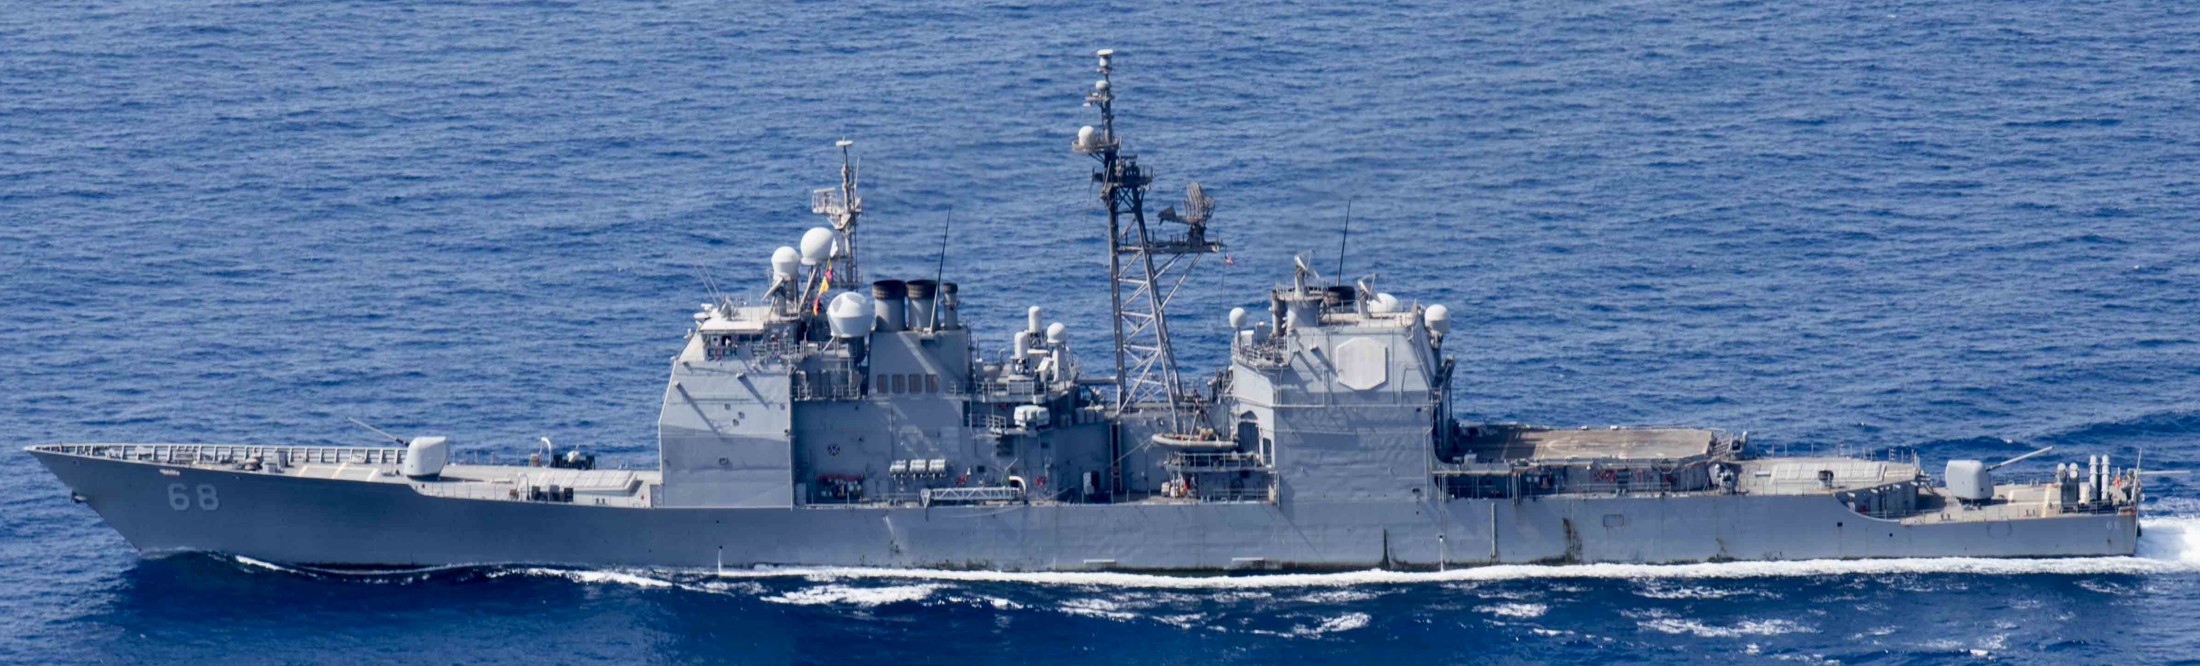 cg-68 uss anzio ticonderoga class guided missile cruiser aegis us navy 49